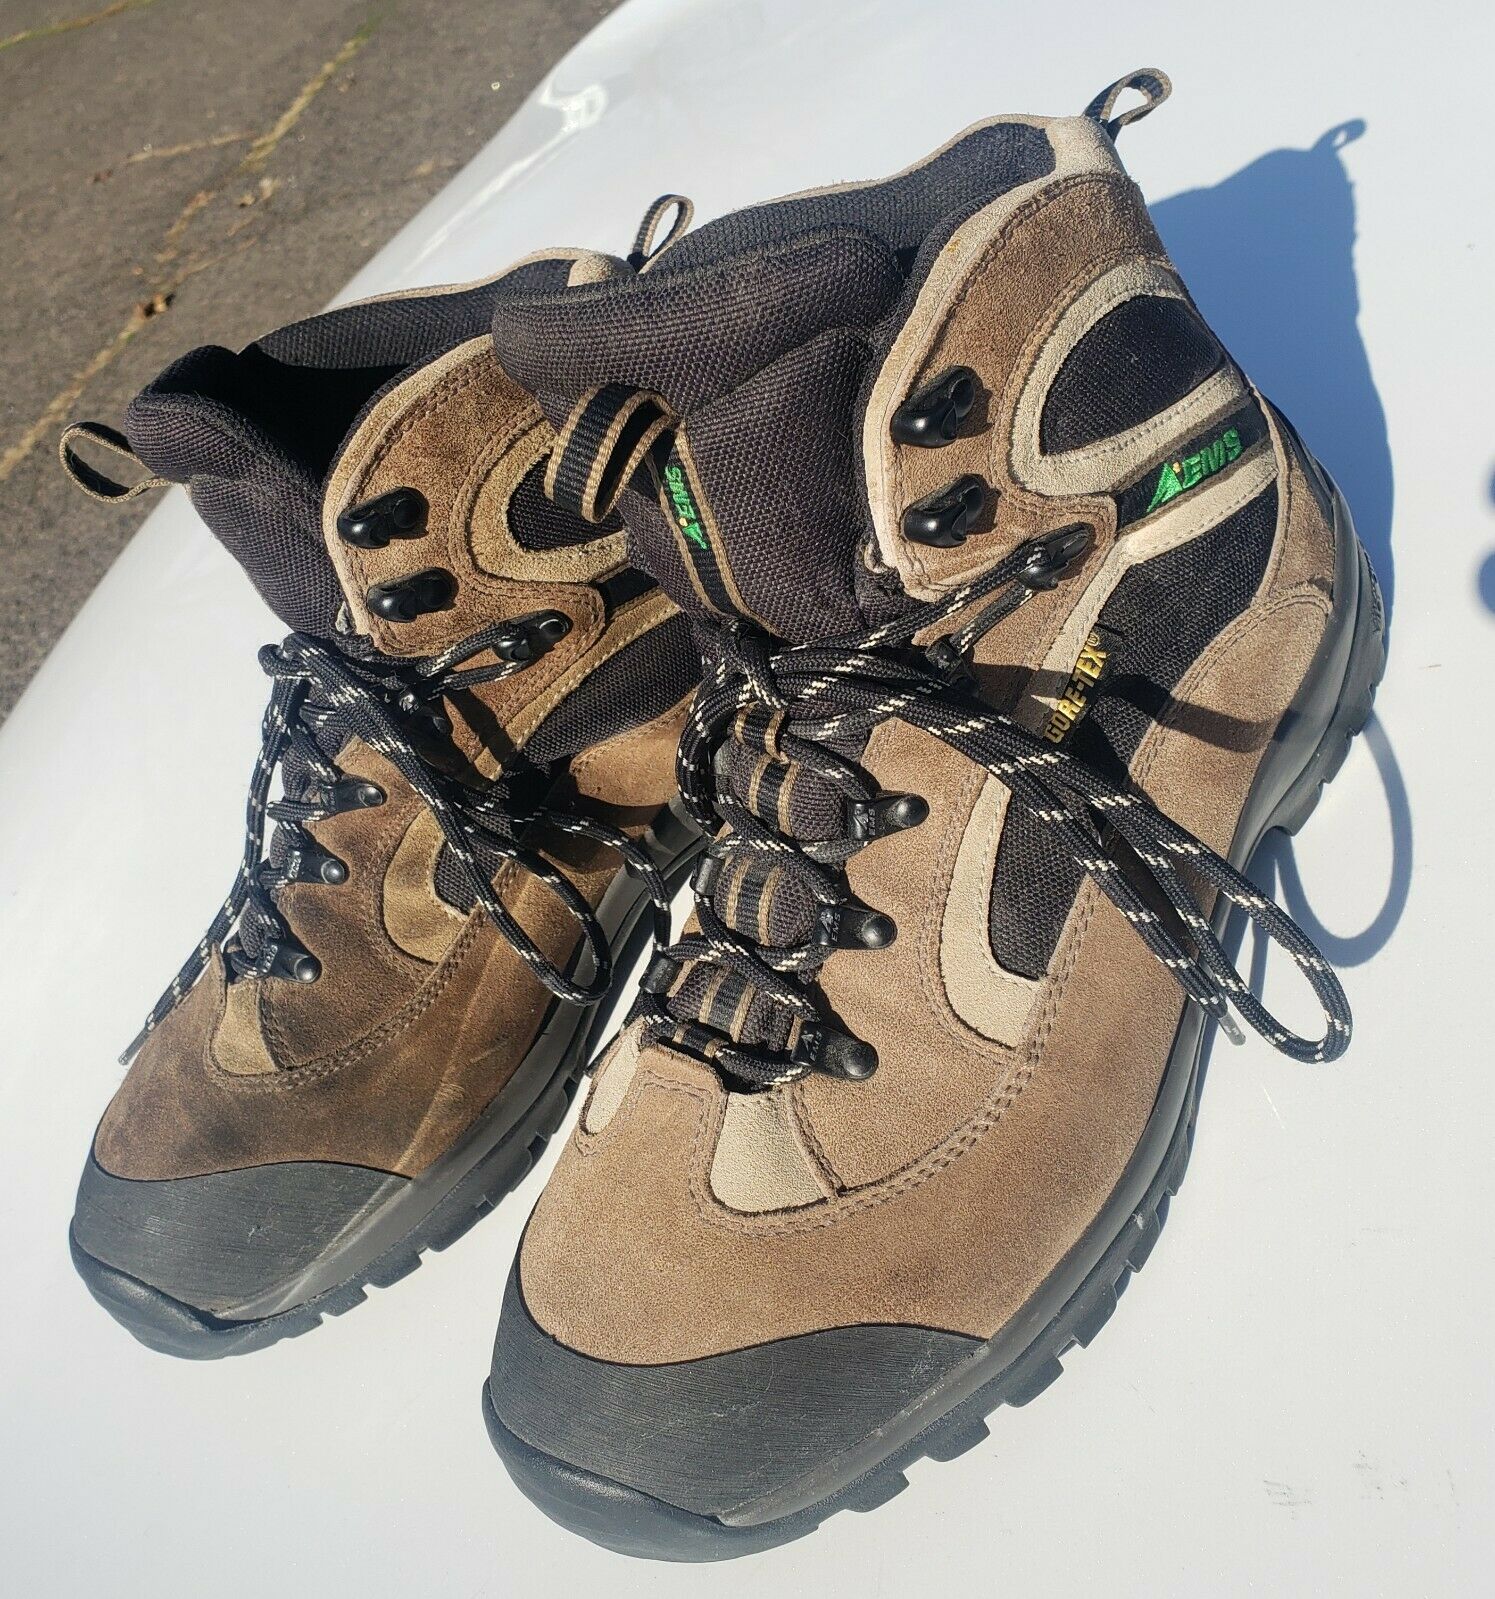 EMS Carter Ridge Gore-Tex GTX Hiking Boots Men’s Size 10.5 Wide